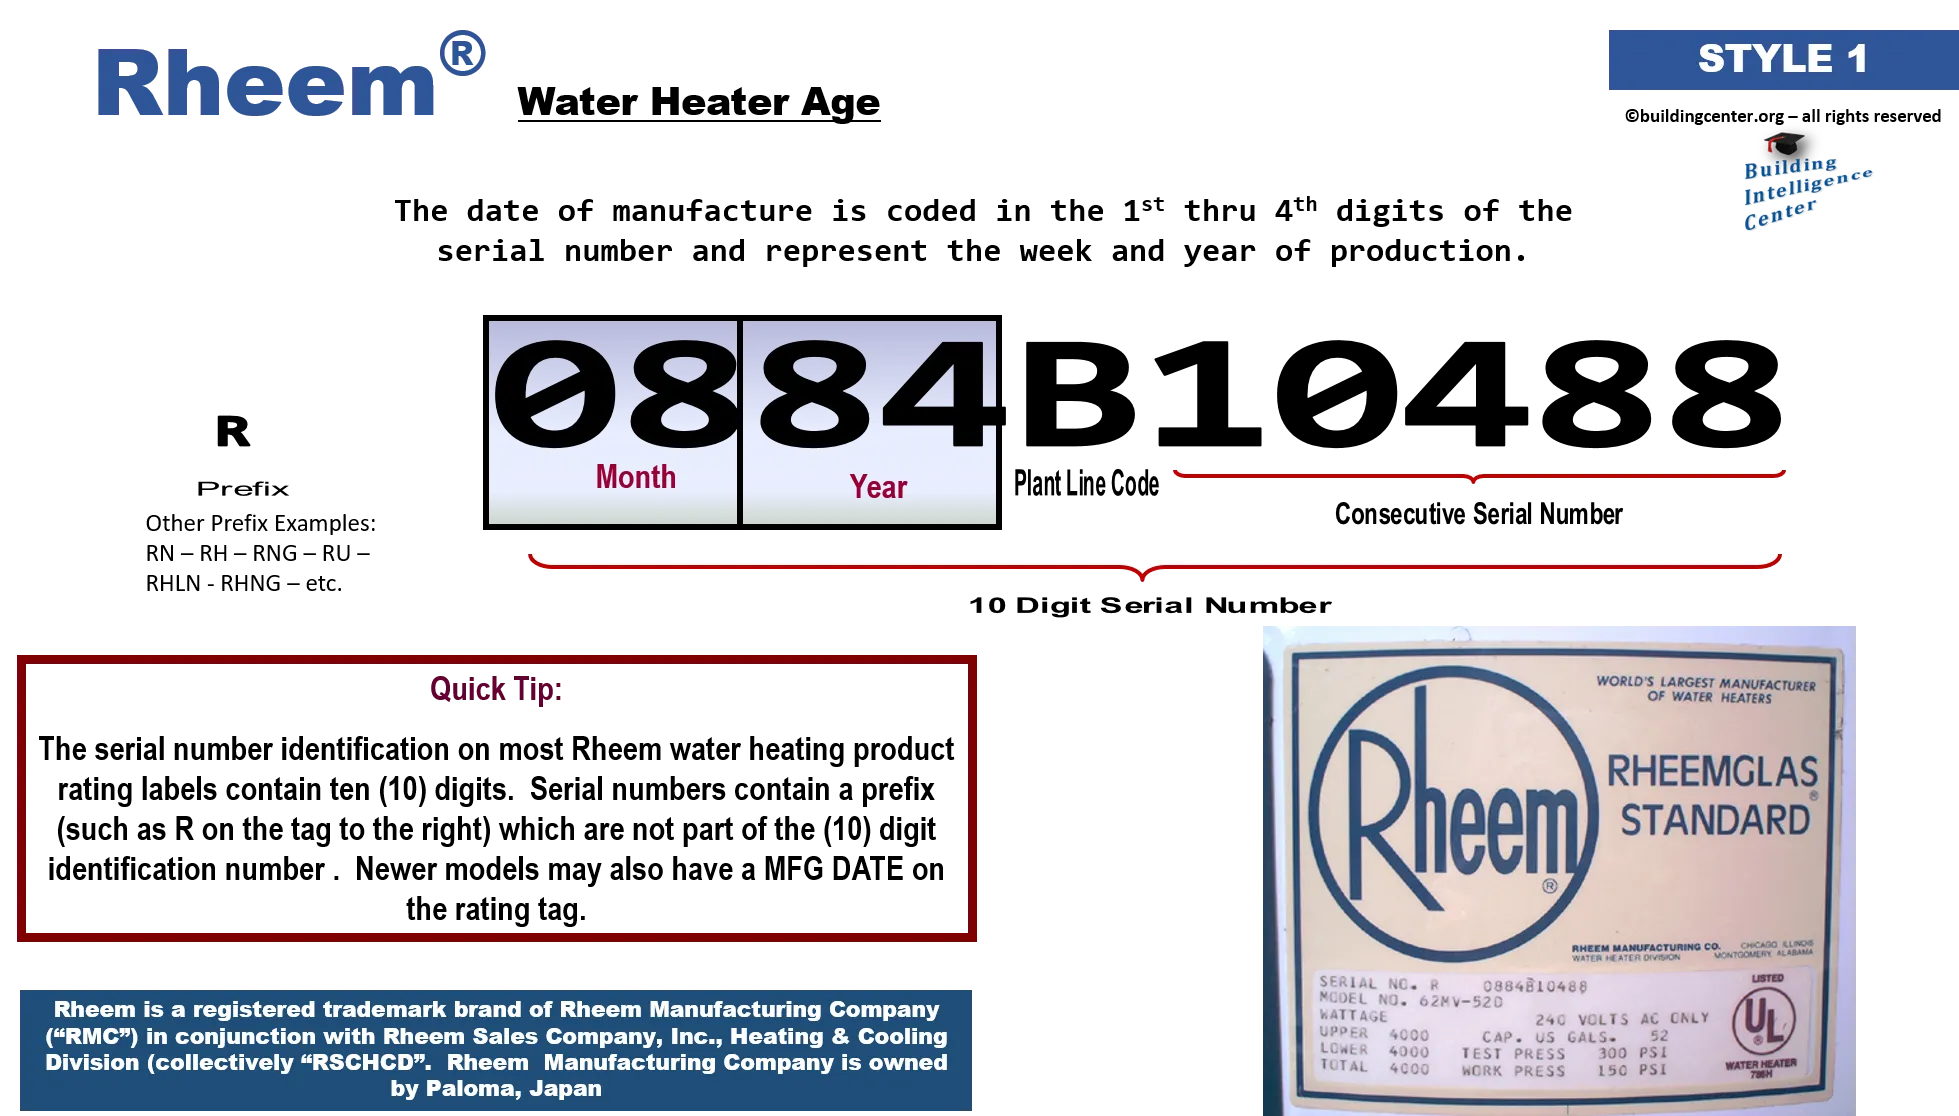 Rheem Water Heater Age – Serial Number – Style 1